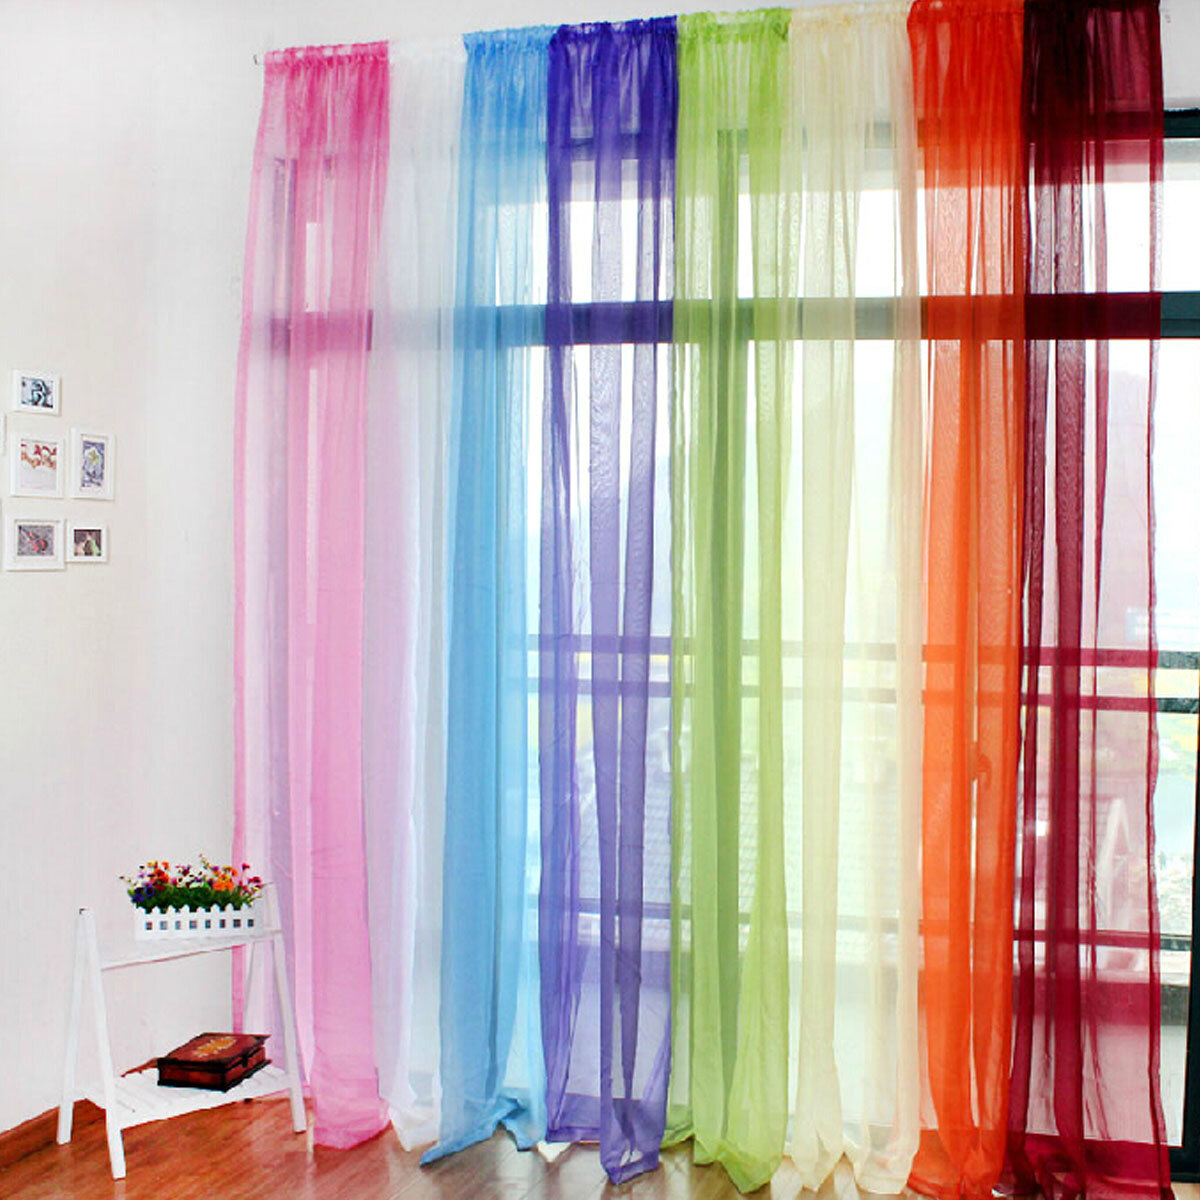 

100 X 200cm Translucent Sheer Tulle Voile Organdy Curtain Door Window Vestibule Room Decor, Pink;green;purple;red;yellow;white;blue;black